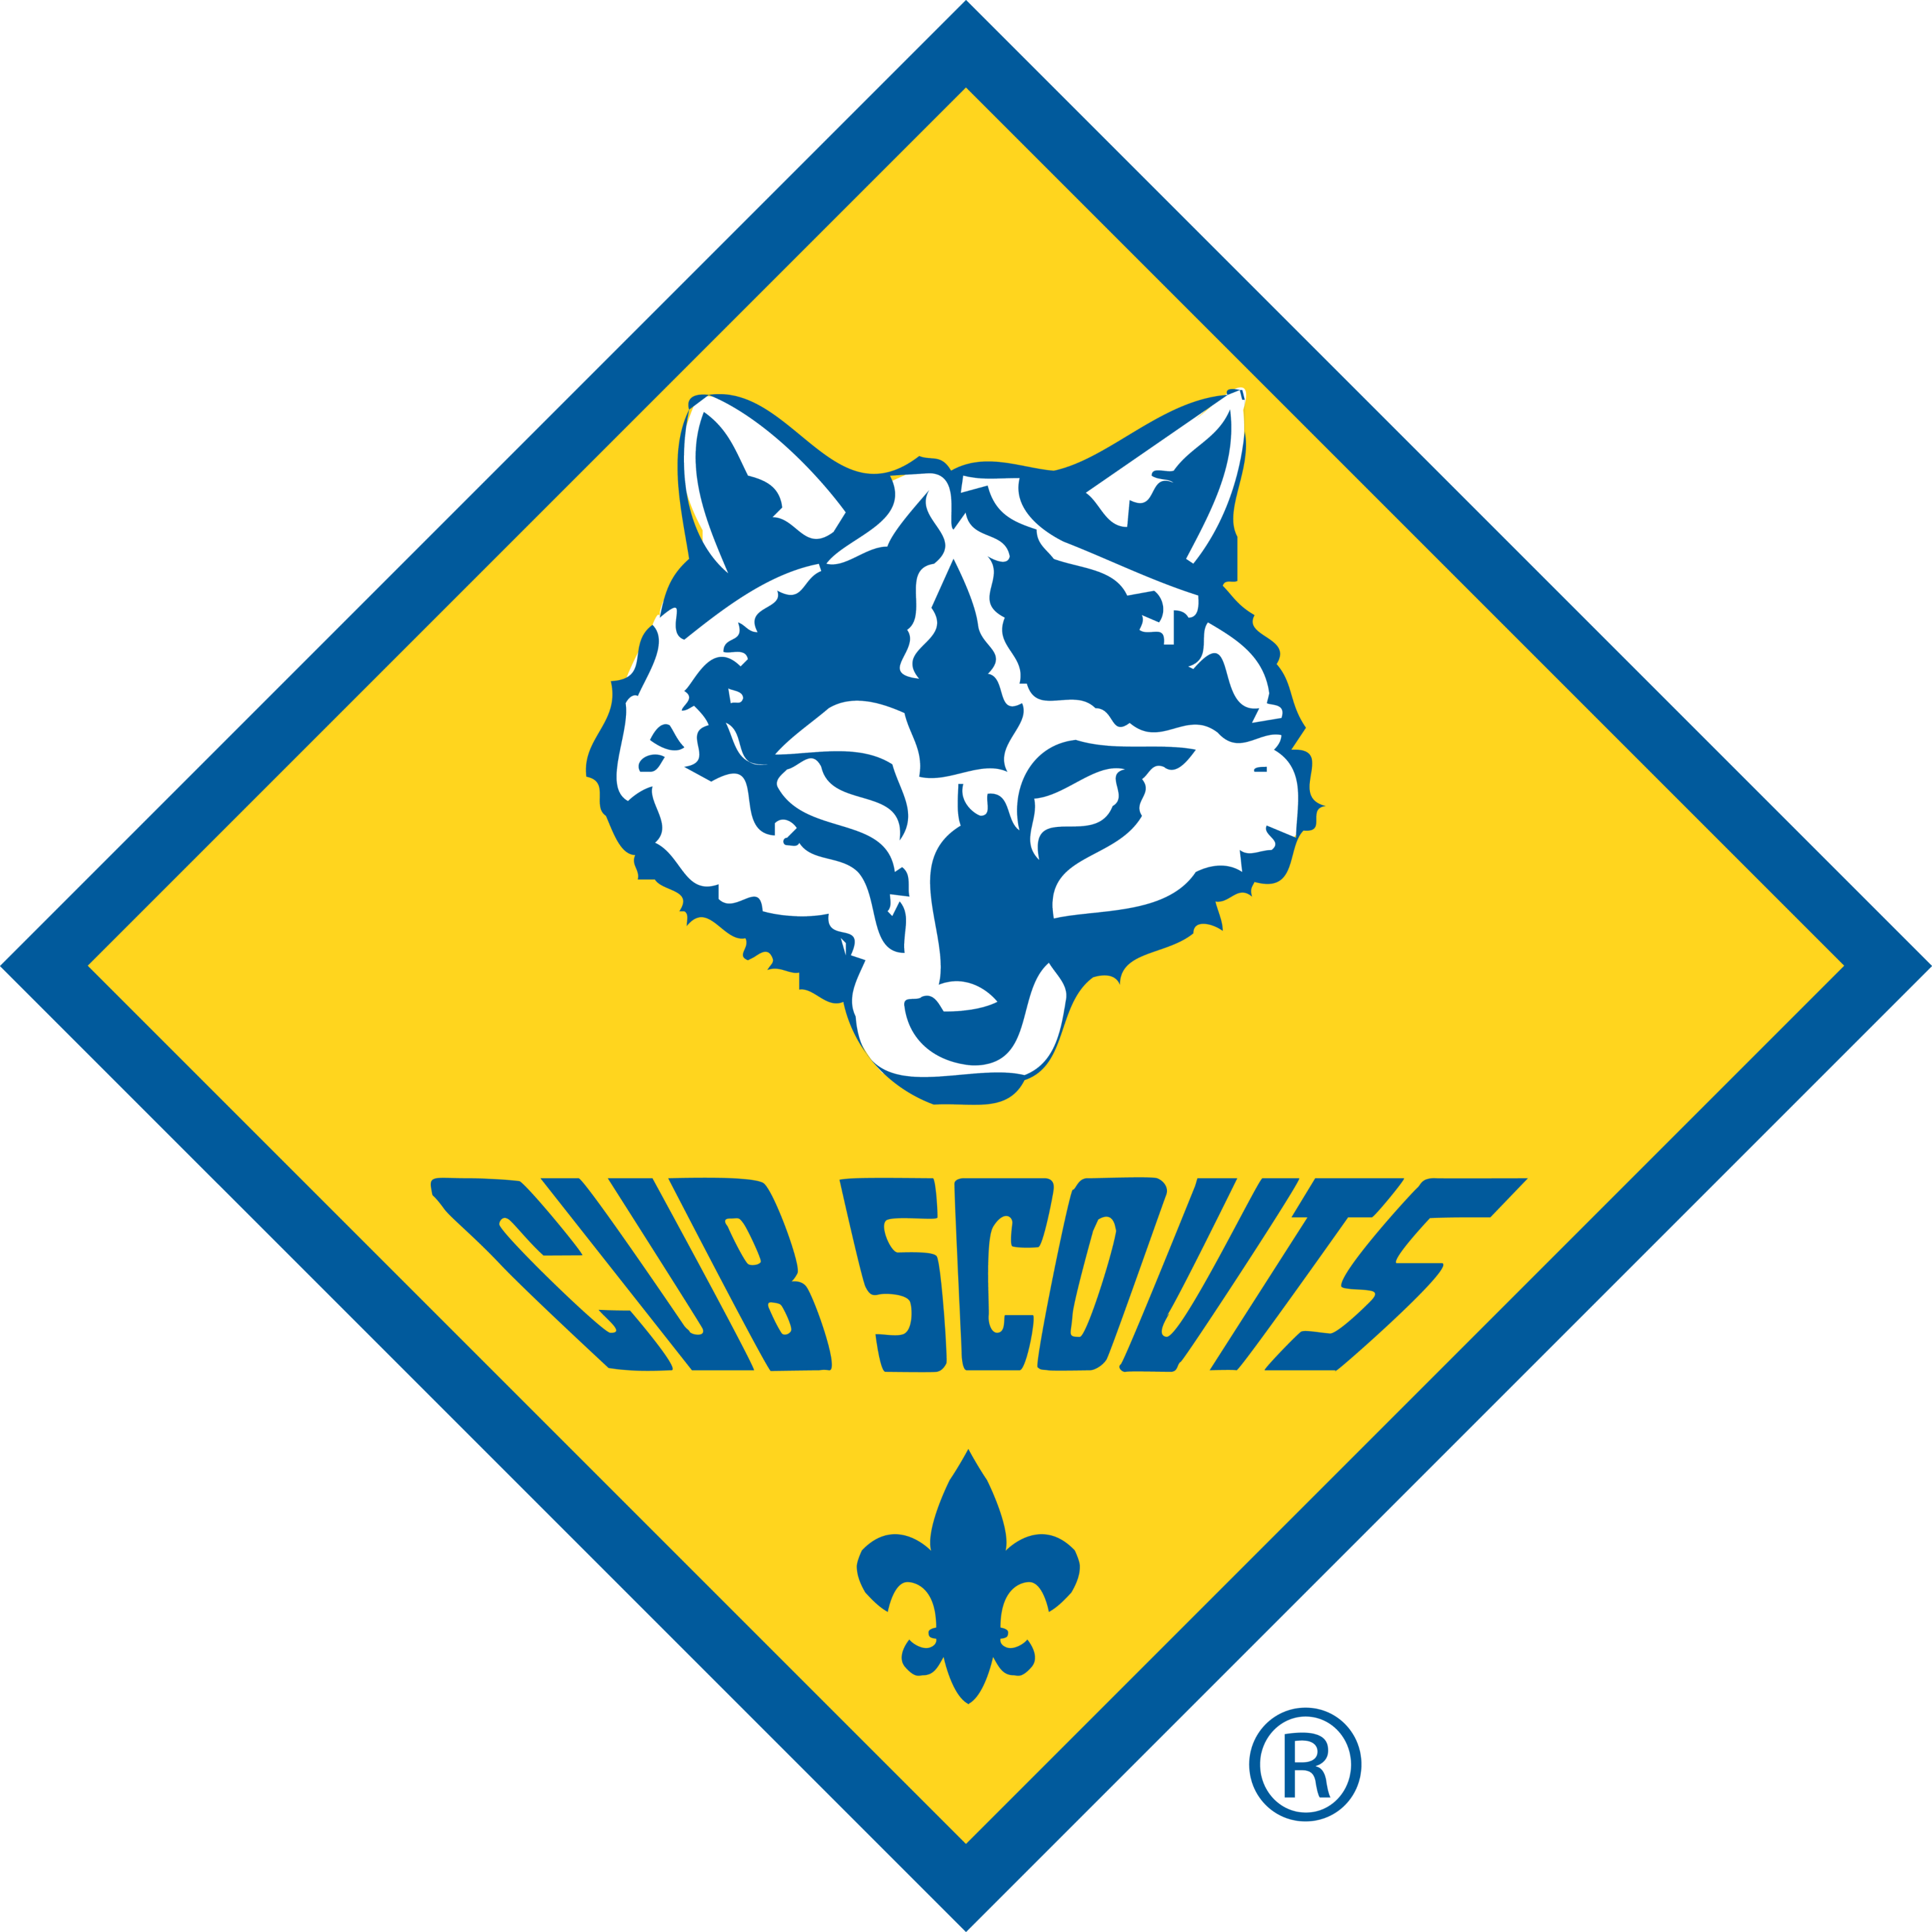 Cub Scout Image for Web